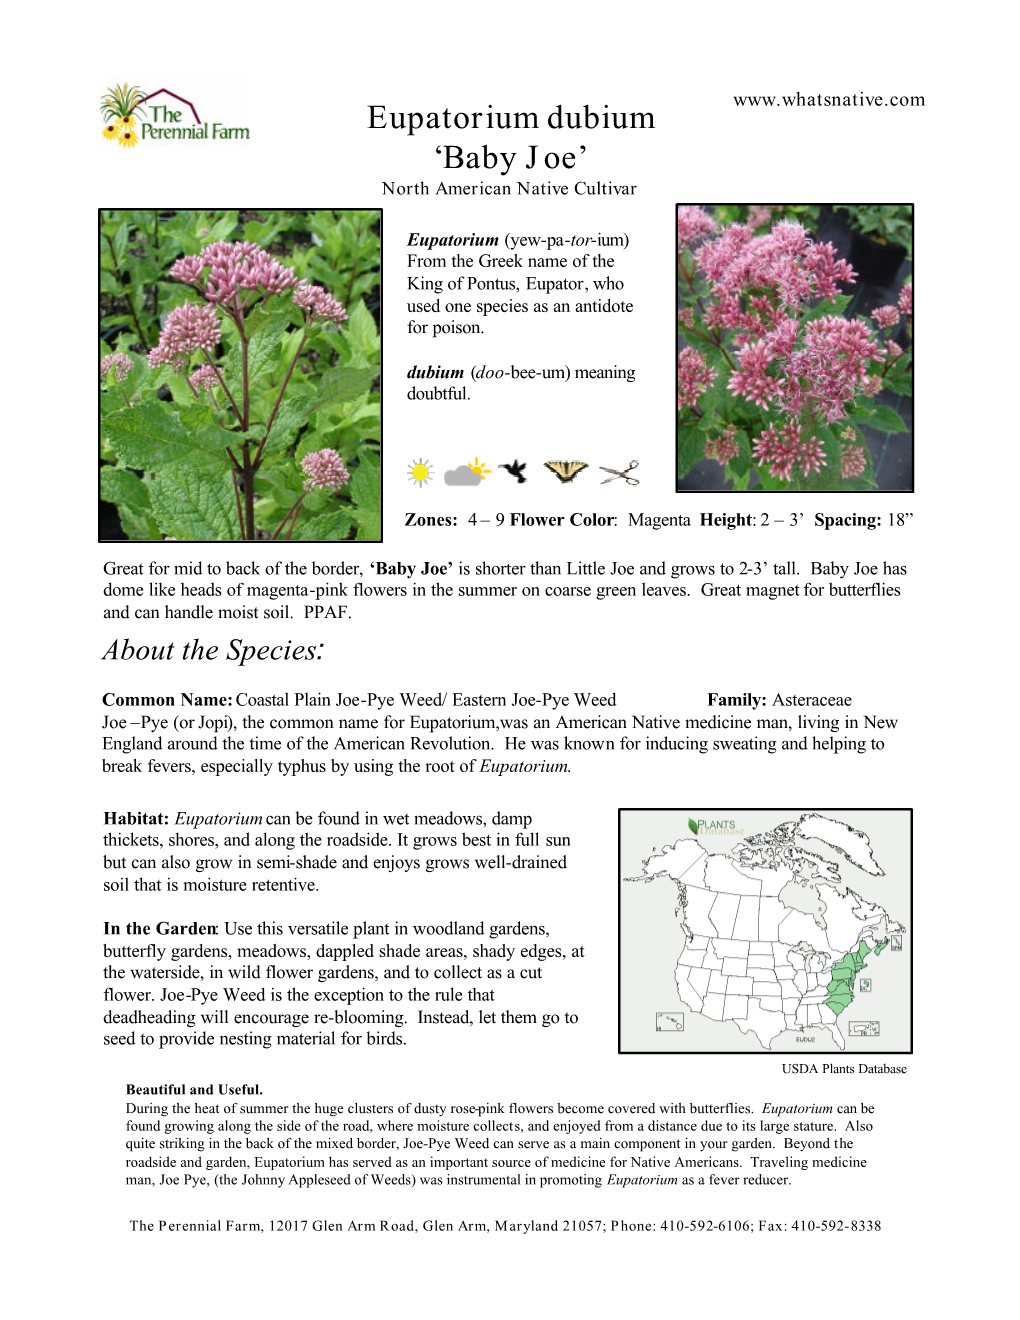 Eupatorium Dubium ‘Baby Joe’ North American Native Cultivar